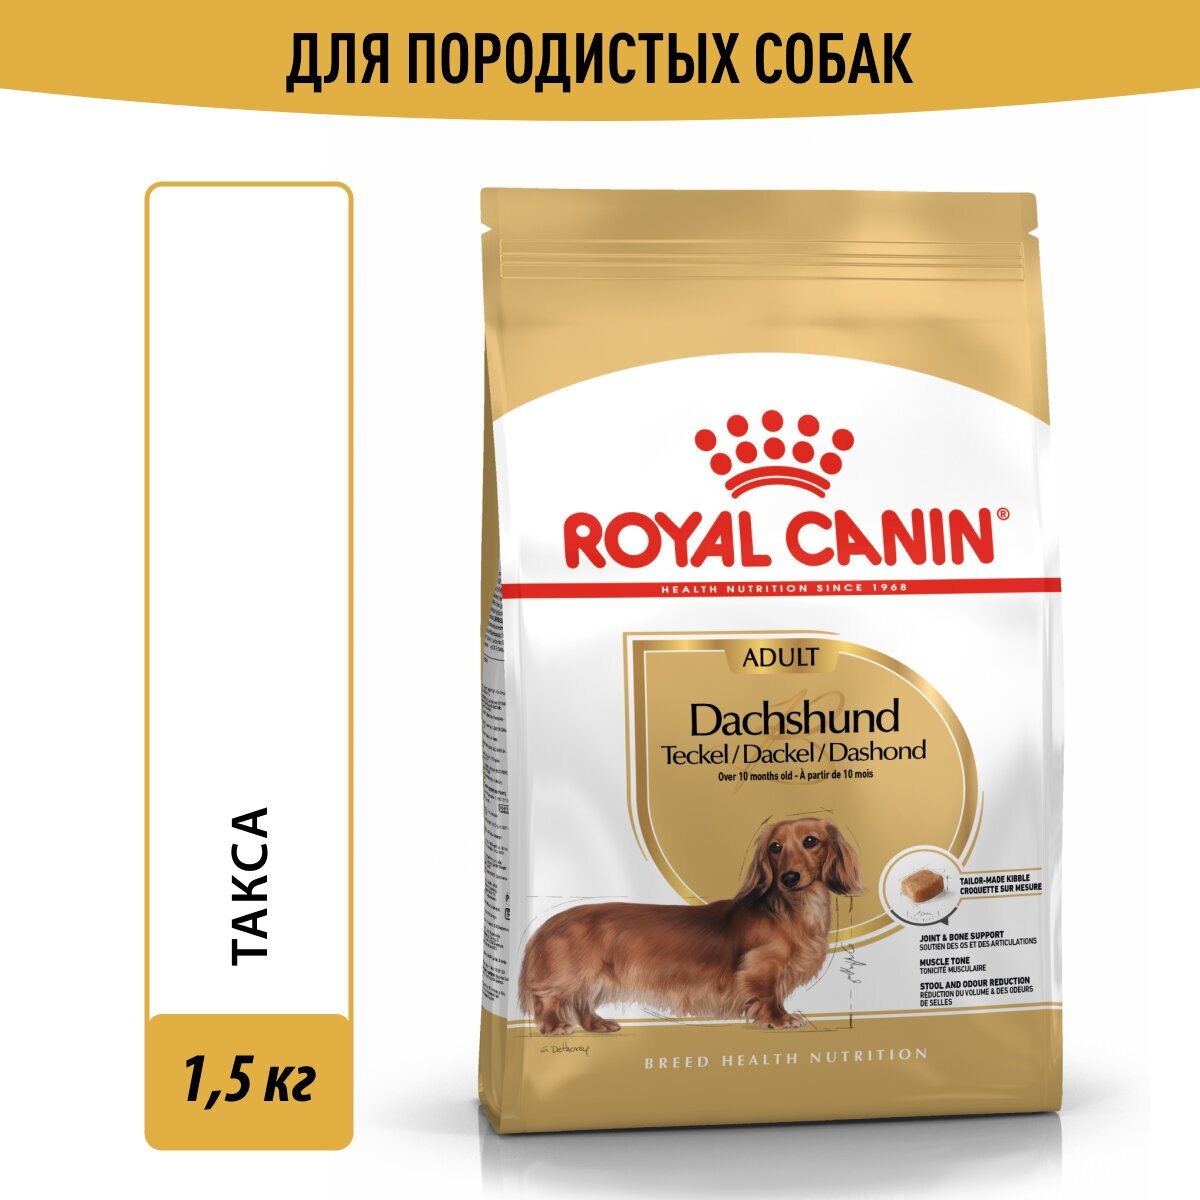 Royal Canin Dachshund Adult для собак породы такса Курица, 1,5 кг.